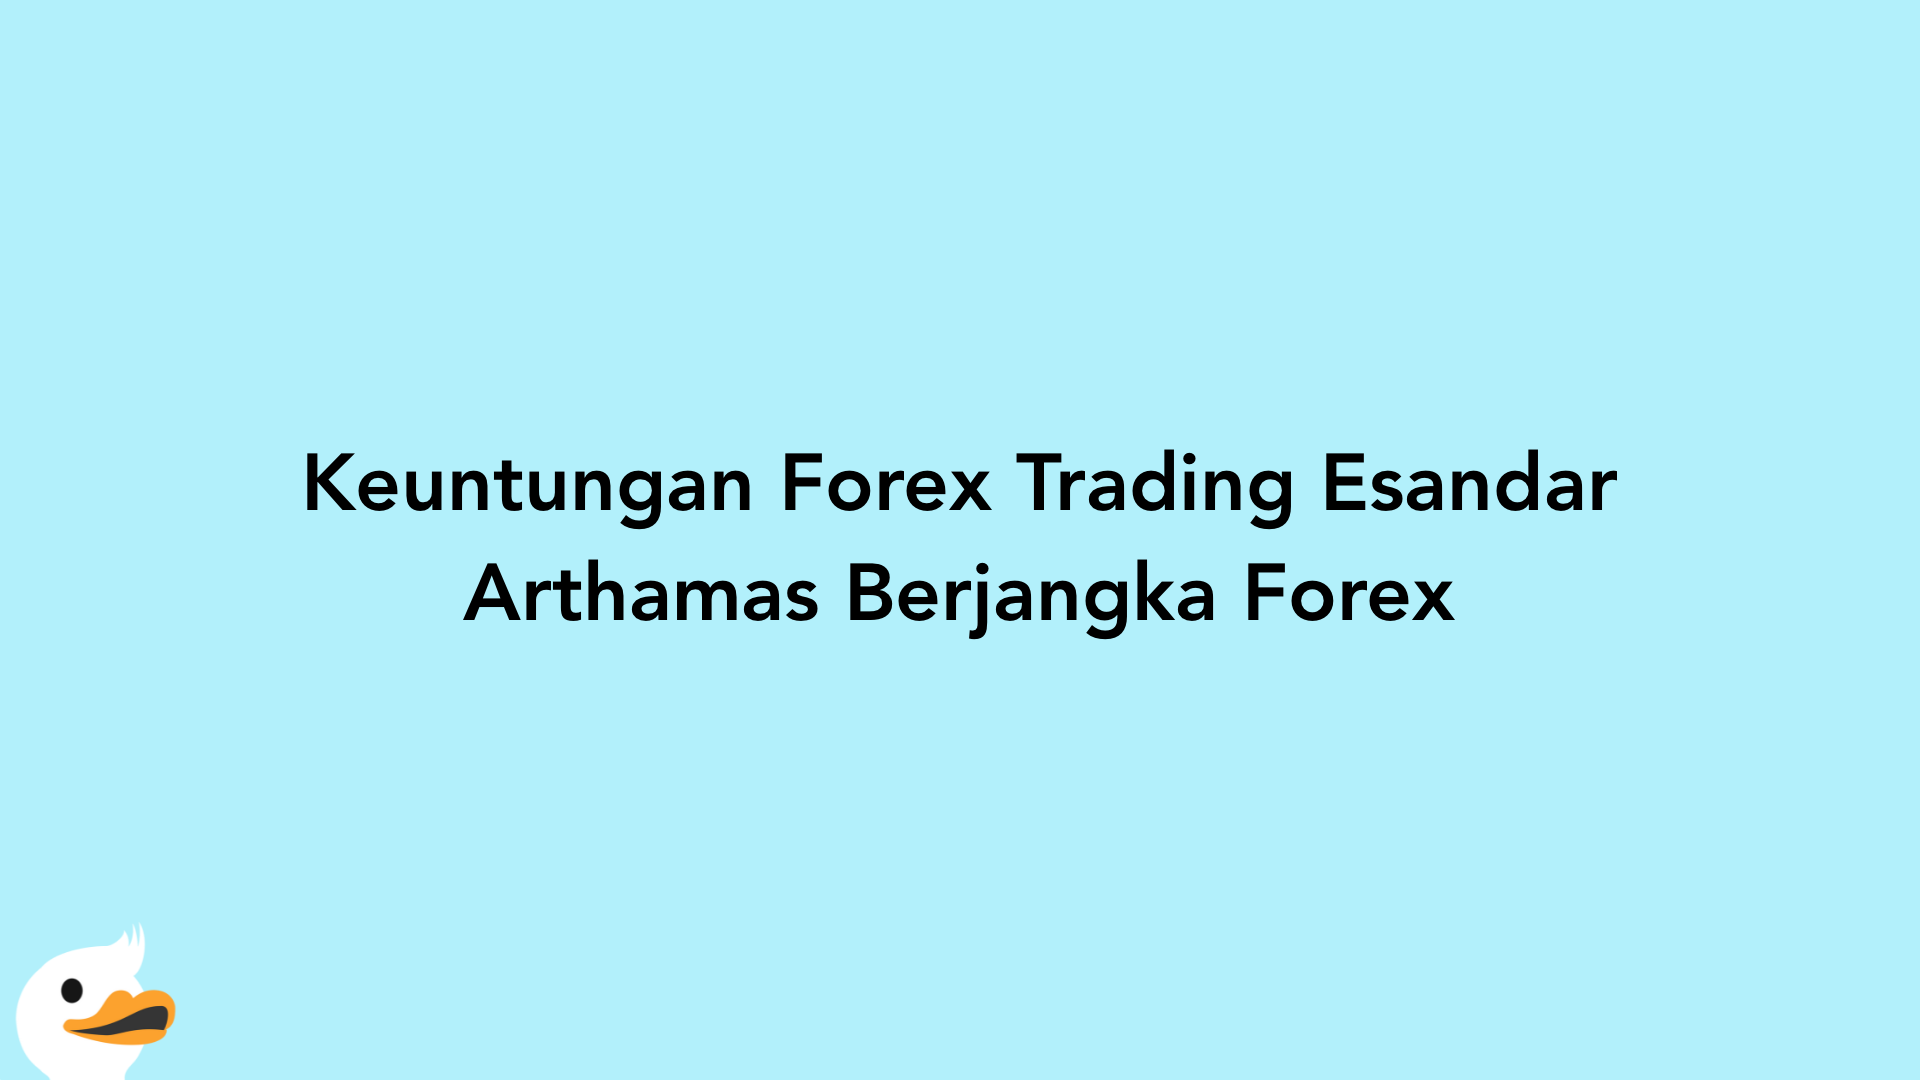 Keuntungan Forex Trading Esandar Arthamas Berjangka Forex